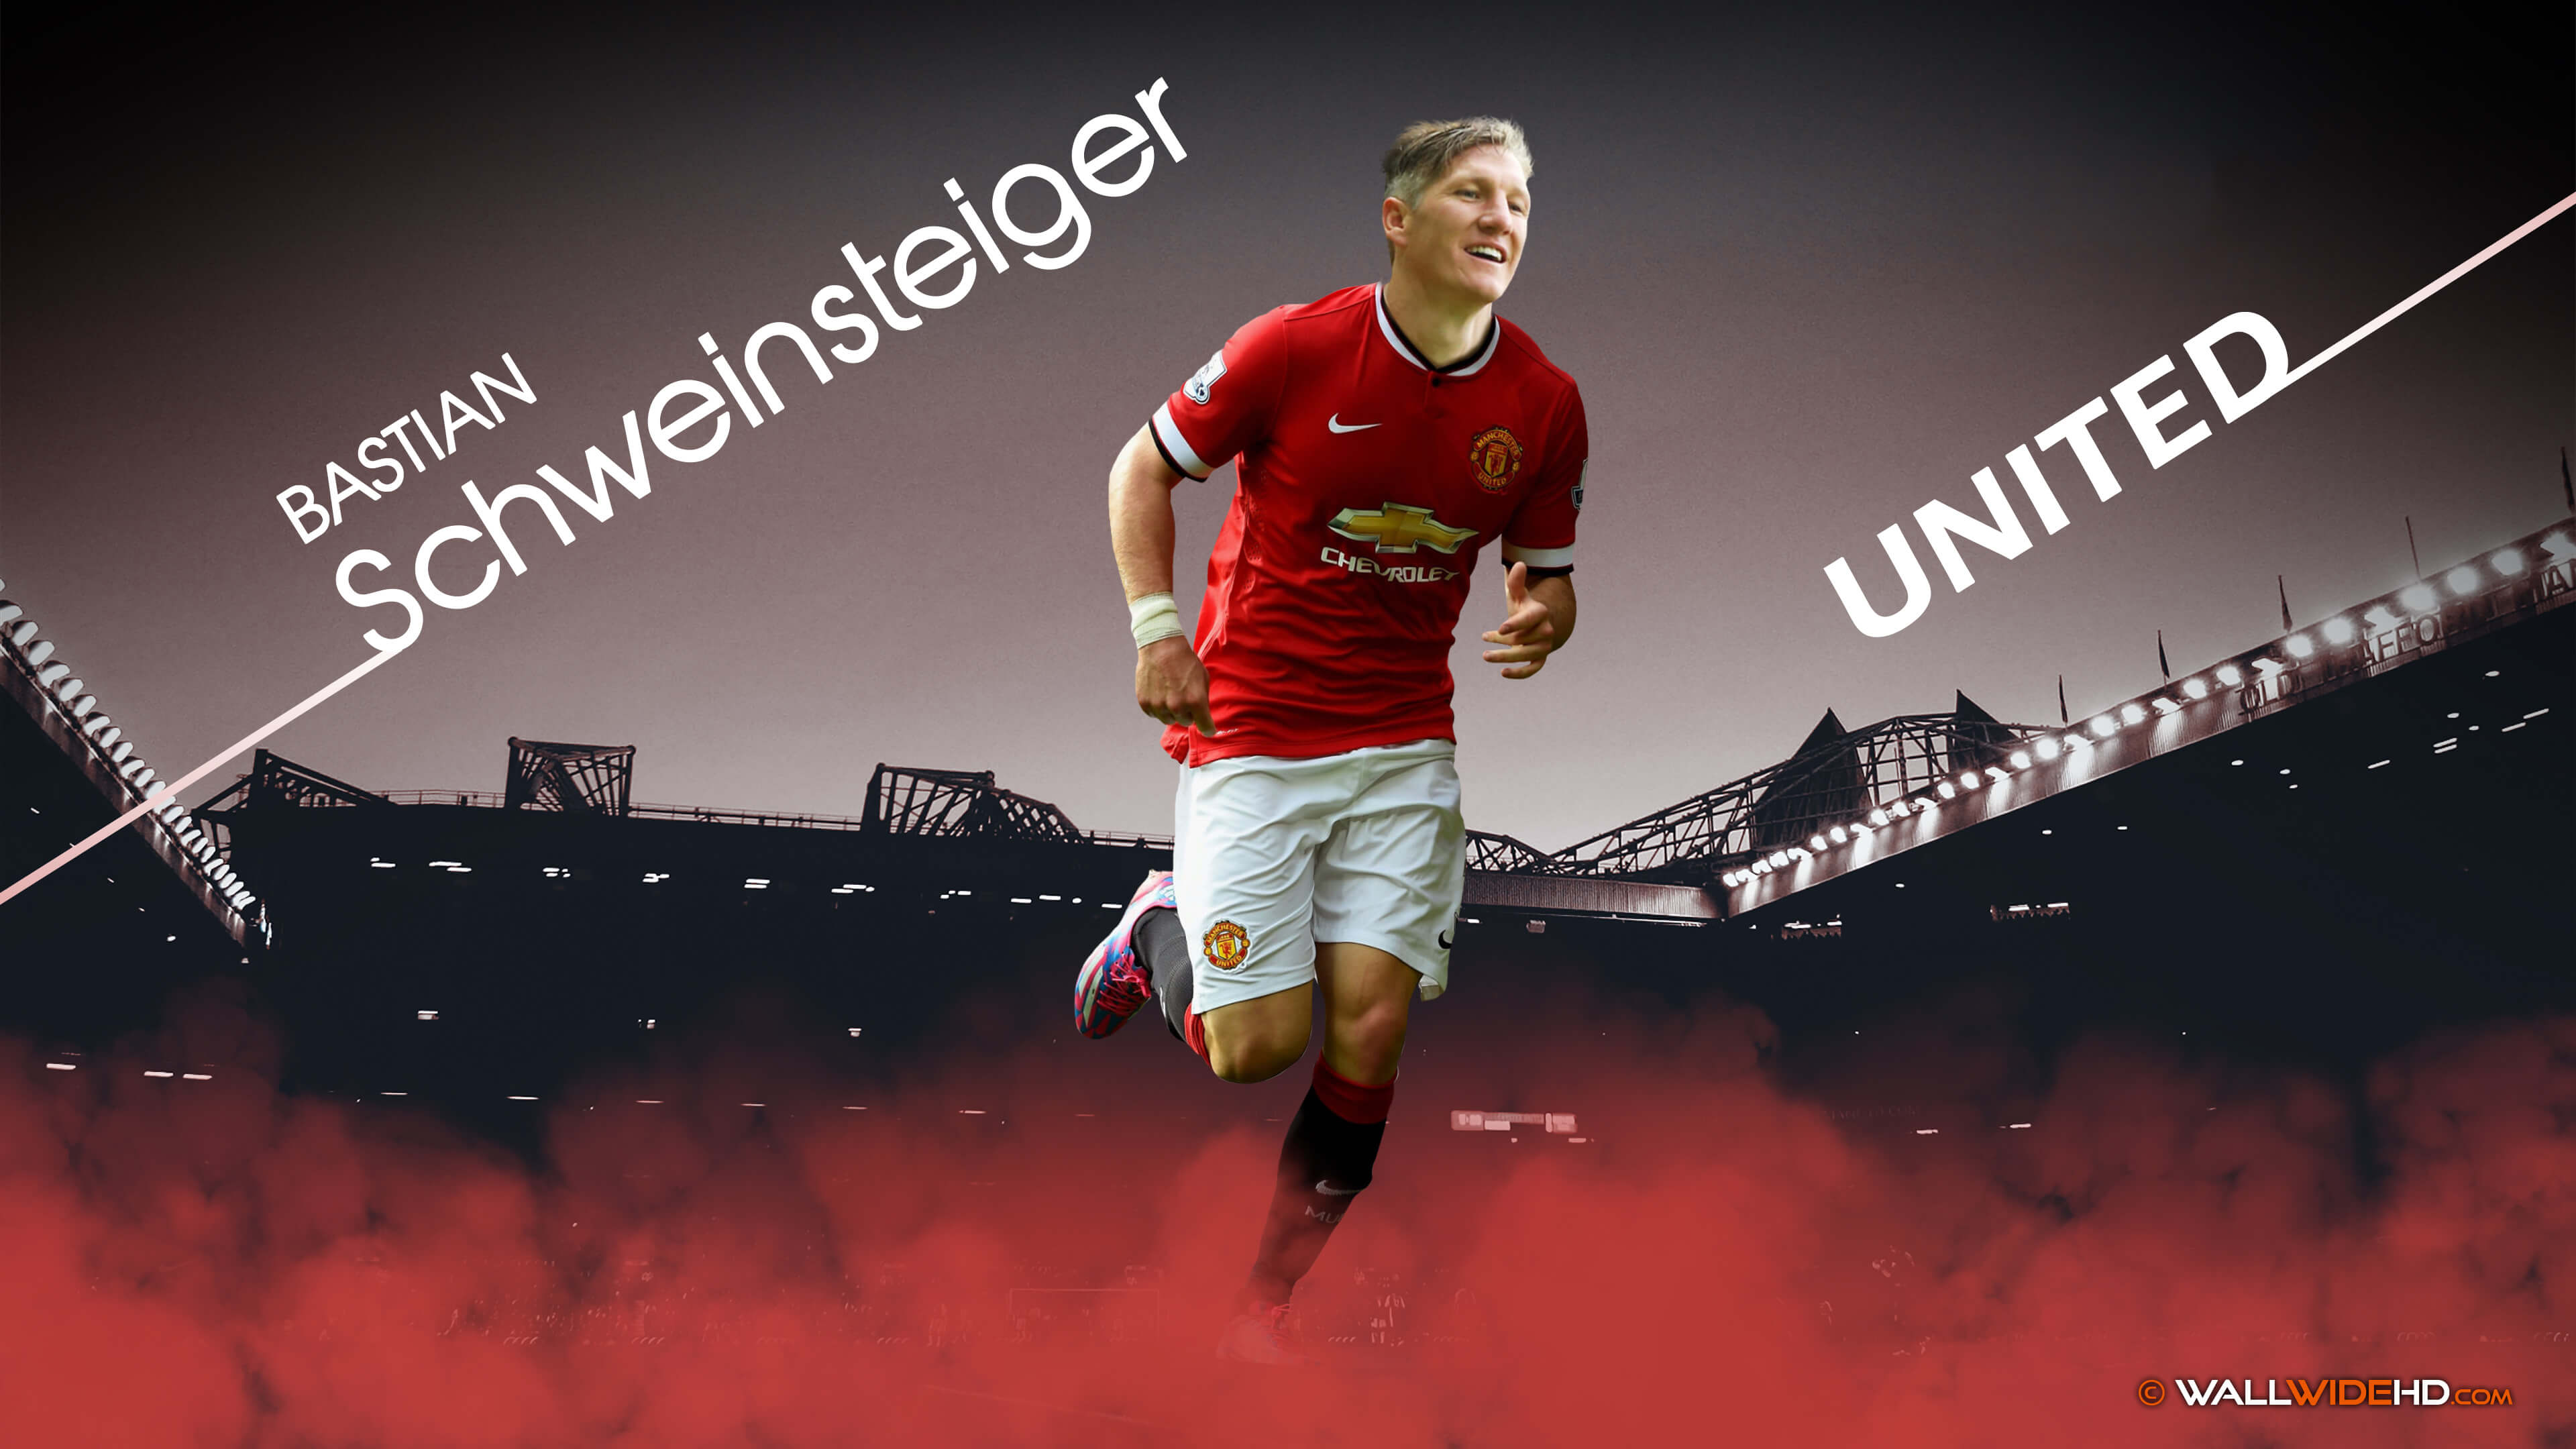 Bastian Schweinsteiger 2015 Manchester United FC wallpaper